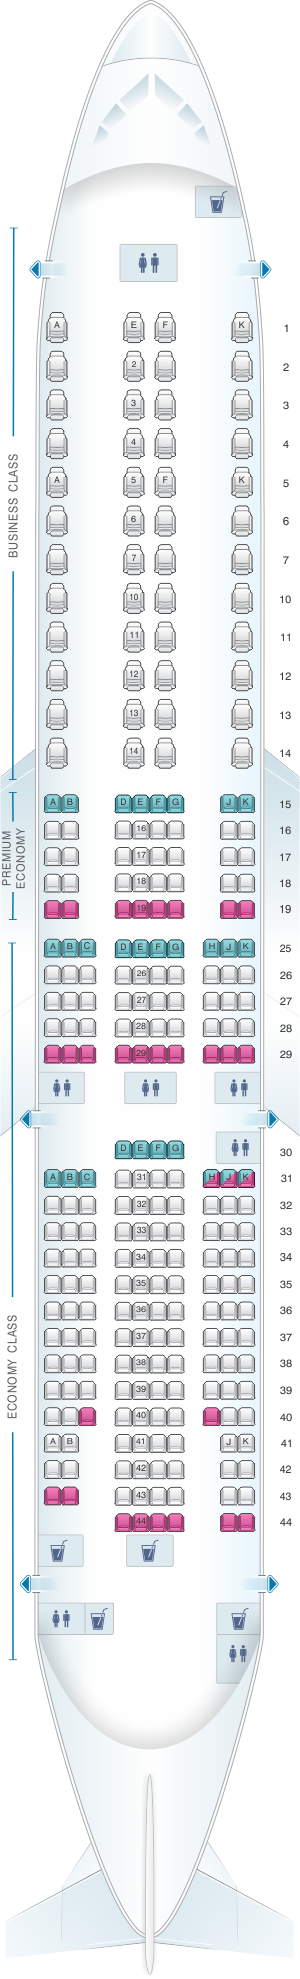 Seat map for British Airways Boeing B777 200 three class V2